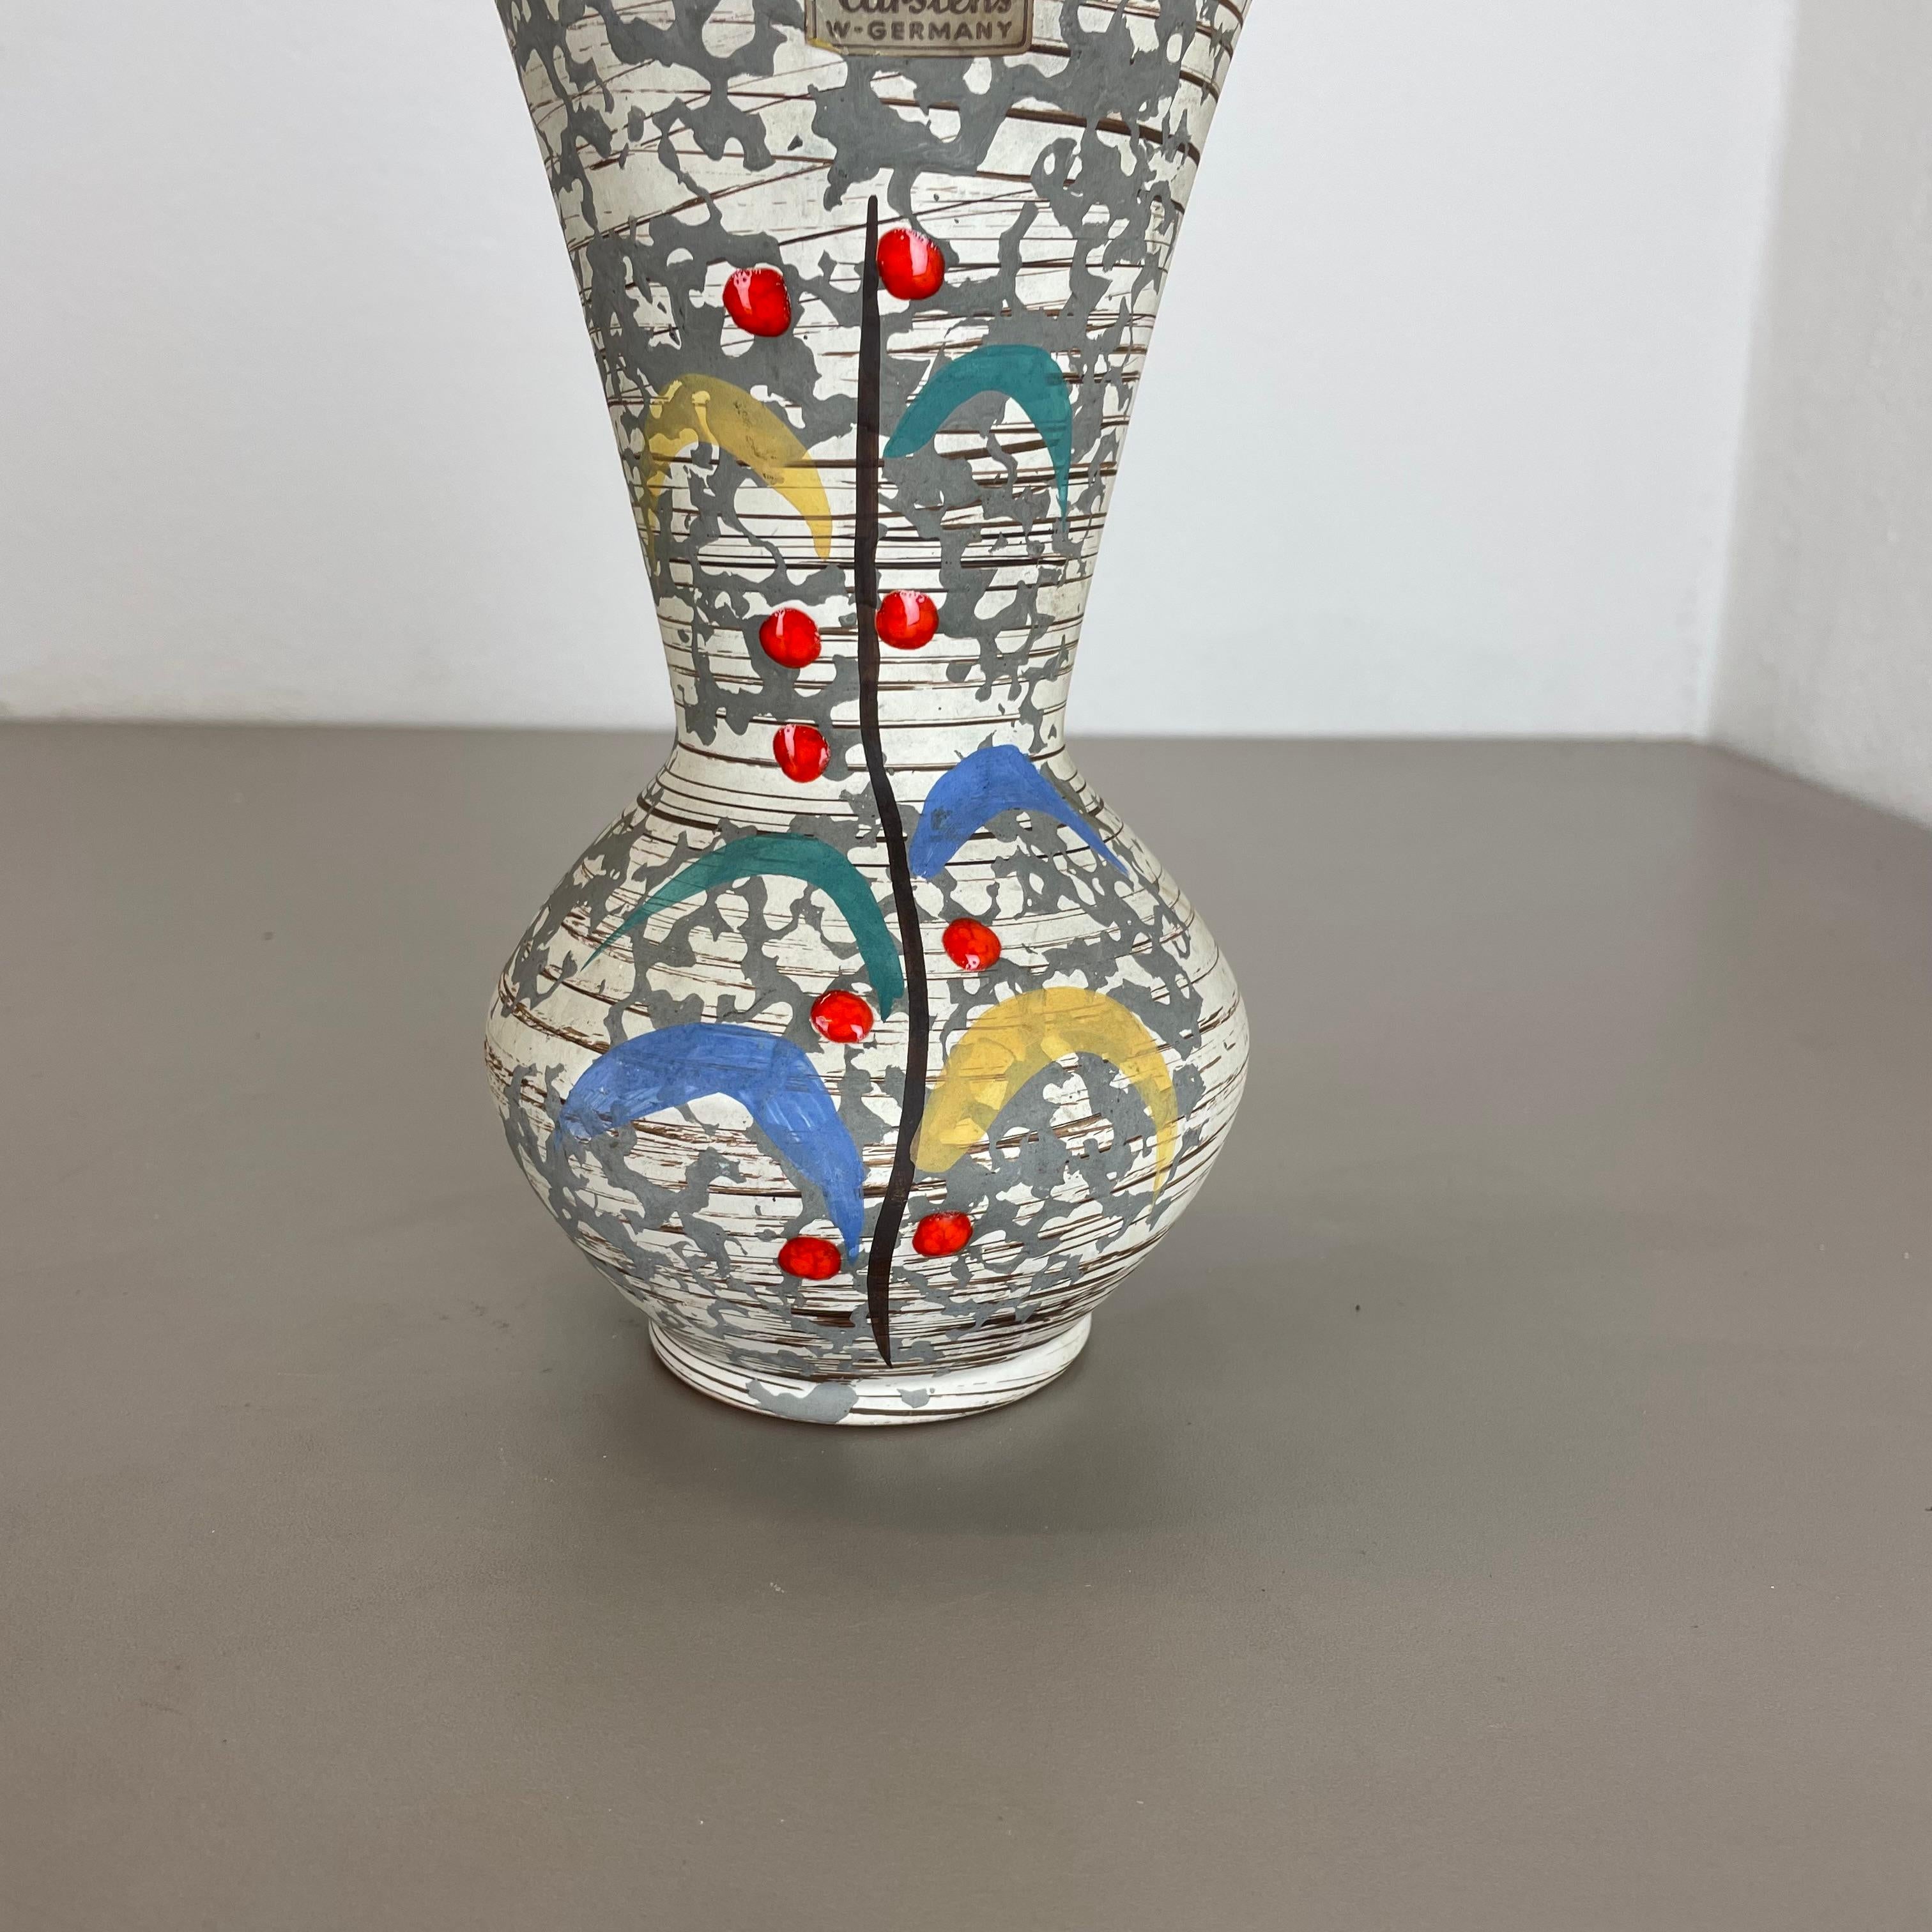 Super Glaze ABSTRACT Ceramic Pottery Vase Carstens Tönnieshof Germany, 1950s For Sale 7